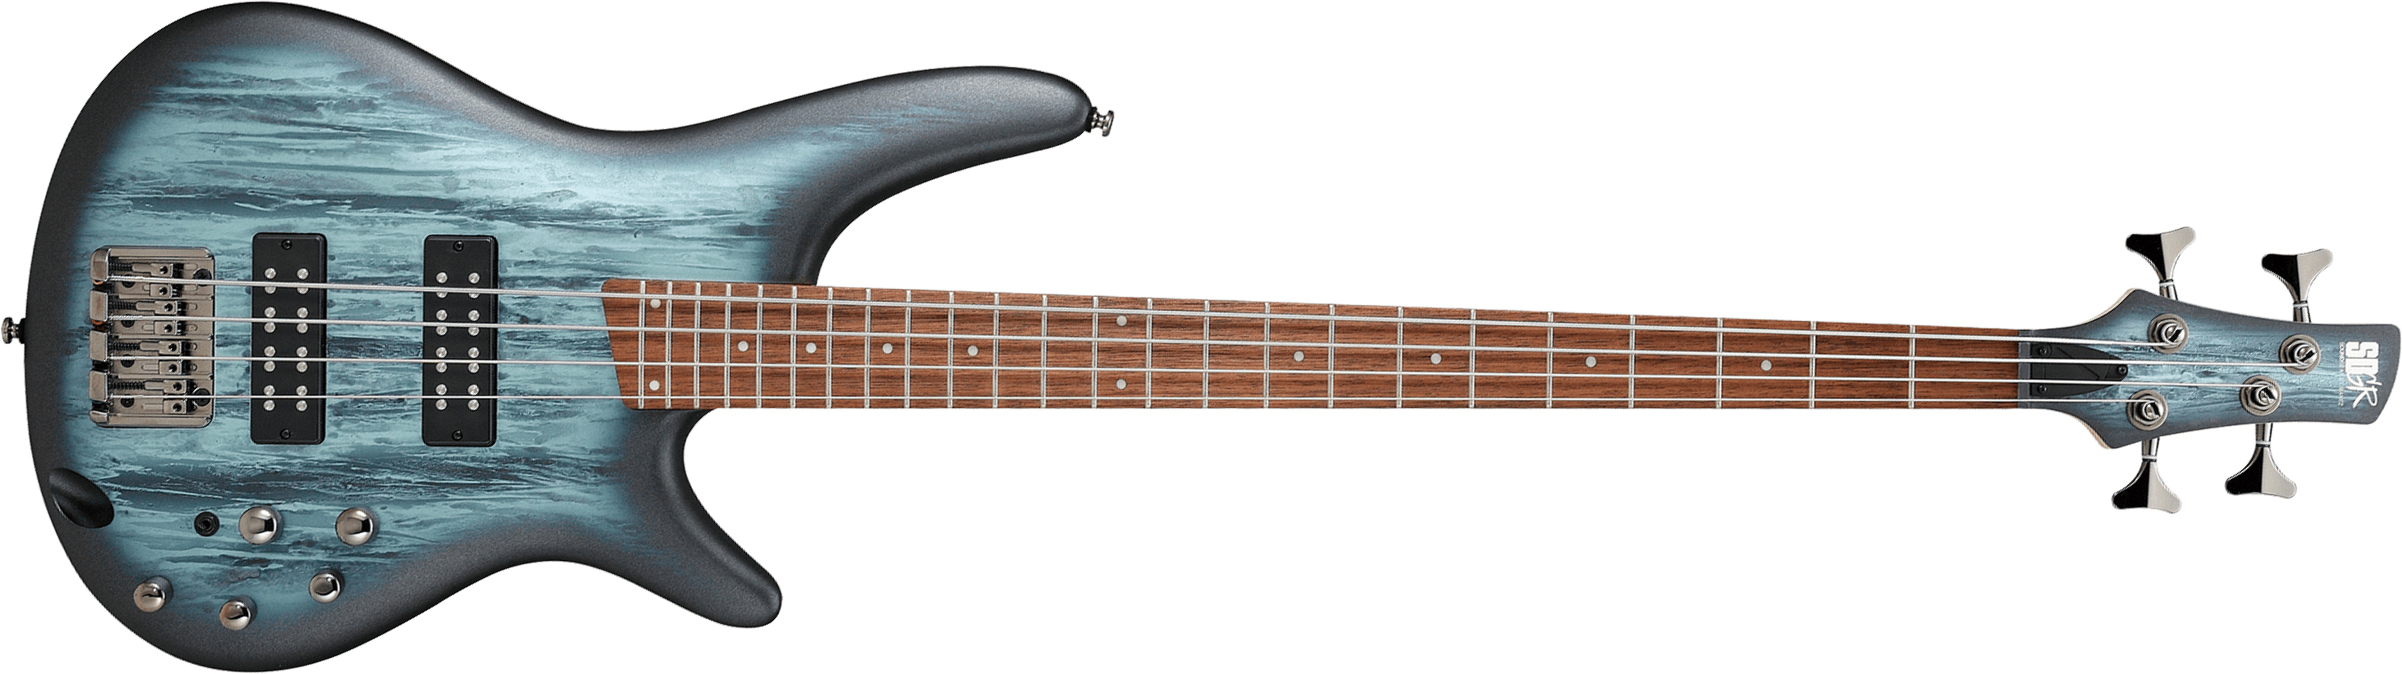 Ibanez Sr300e Svm Standard Active Jat - Sky Veil Matte - Solid body electric bass - Main picture